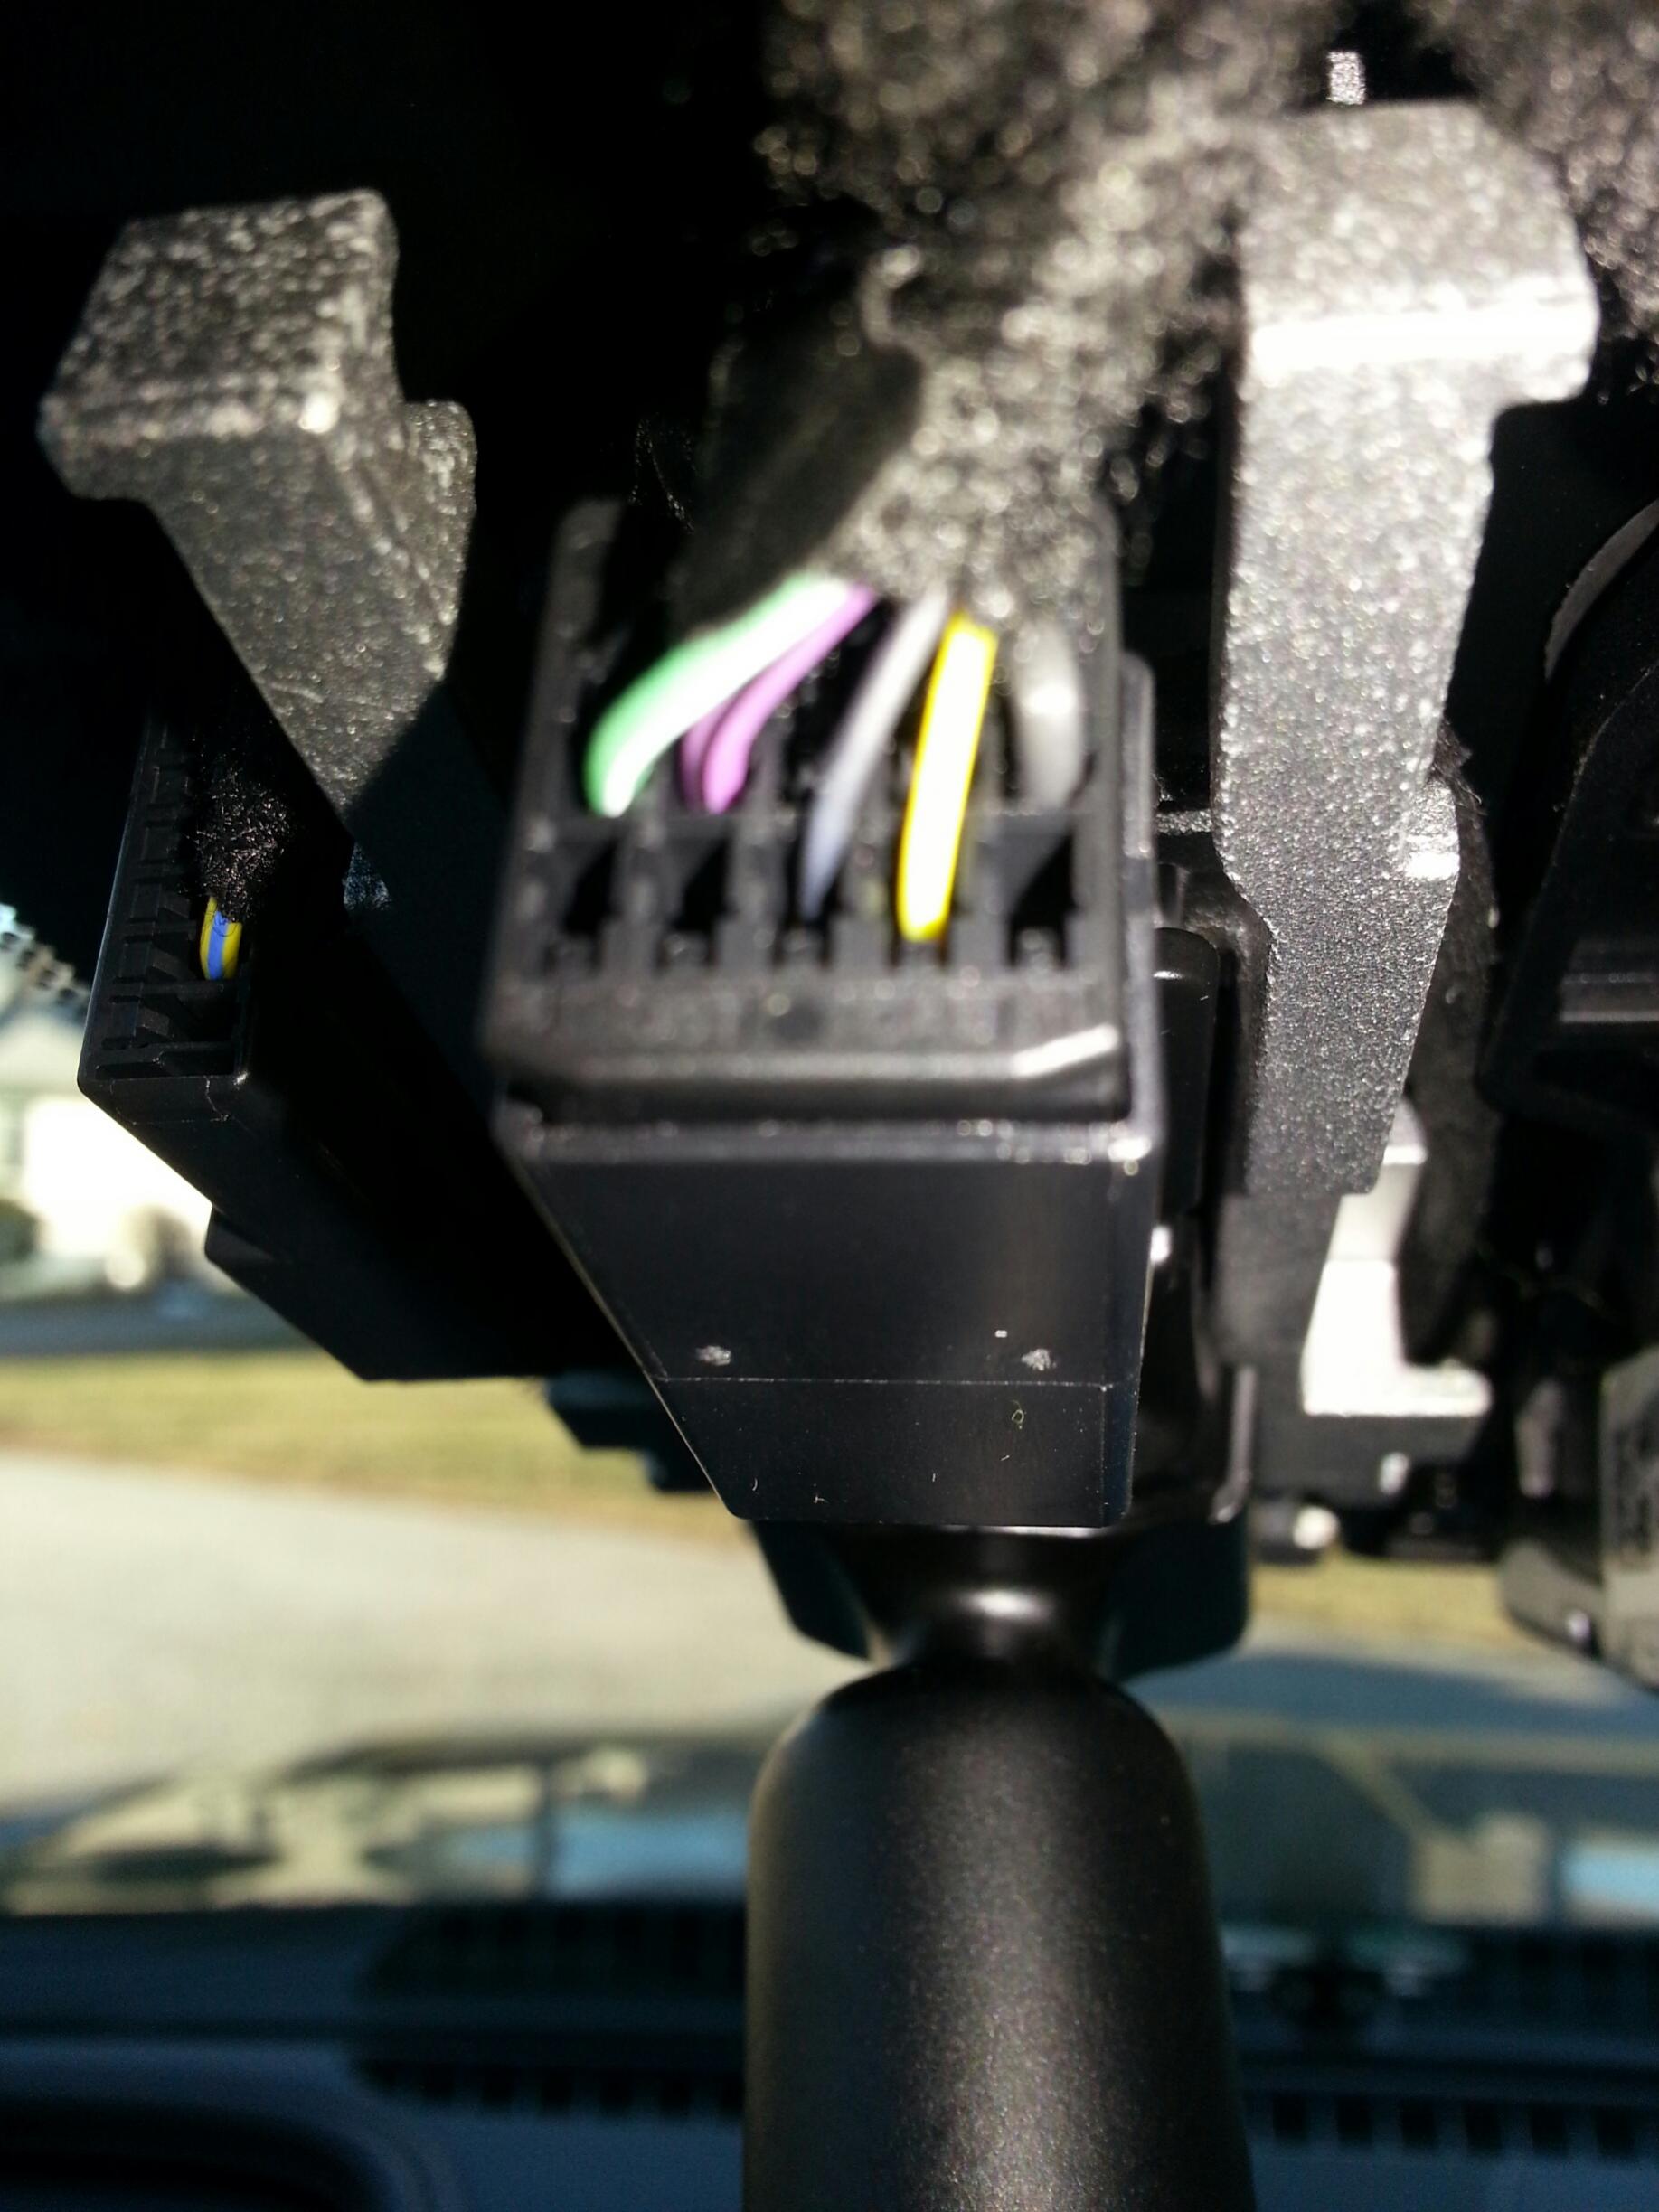 2014 Impala LTZ Mirror Tap/ Blend Mount for Radar Detector ... power amp wiring 